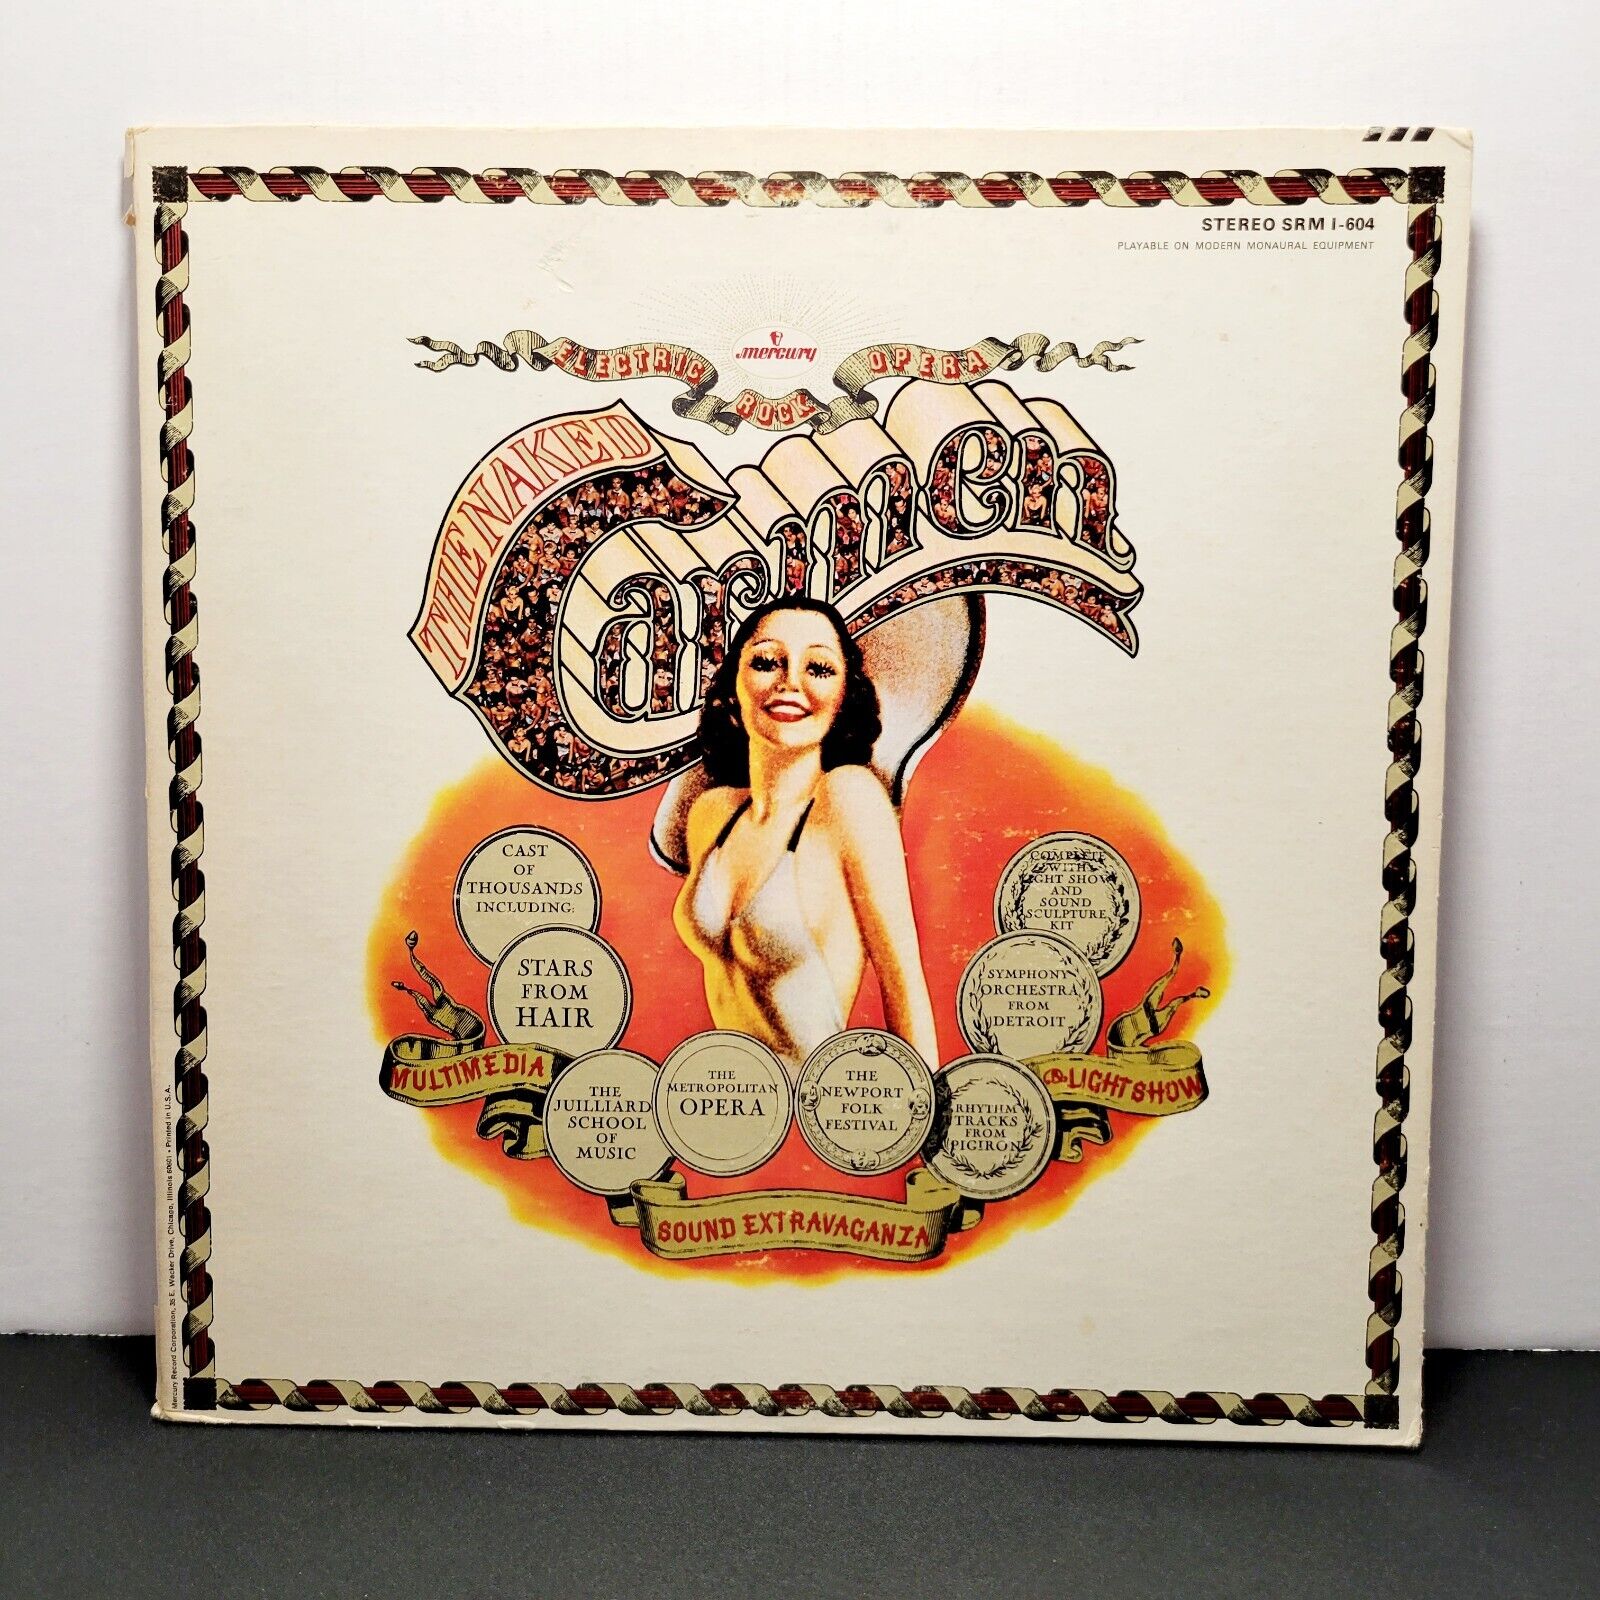 "NAKED CARMEN" Score (Vinyl LP 1970) Gatefold Sleeve (VG) Record (G+) SRM-1-604